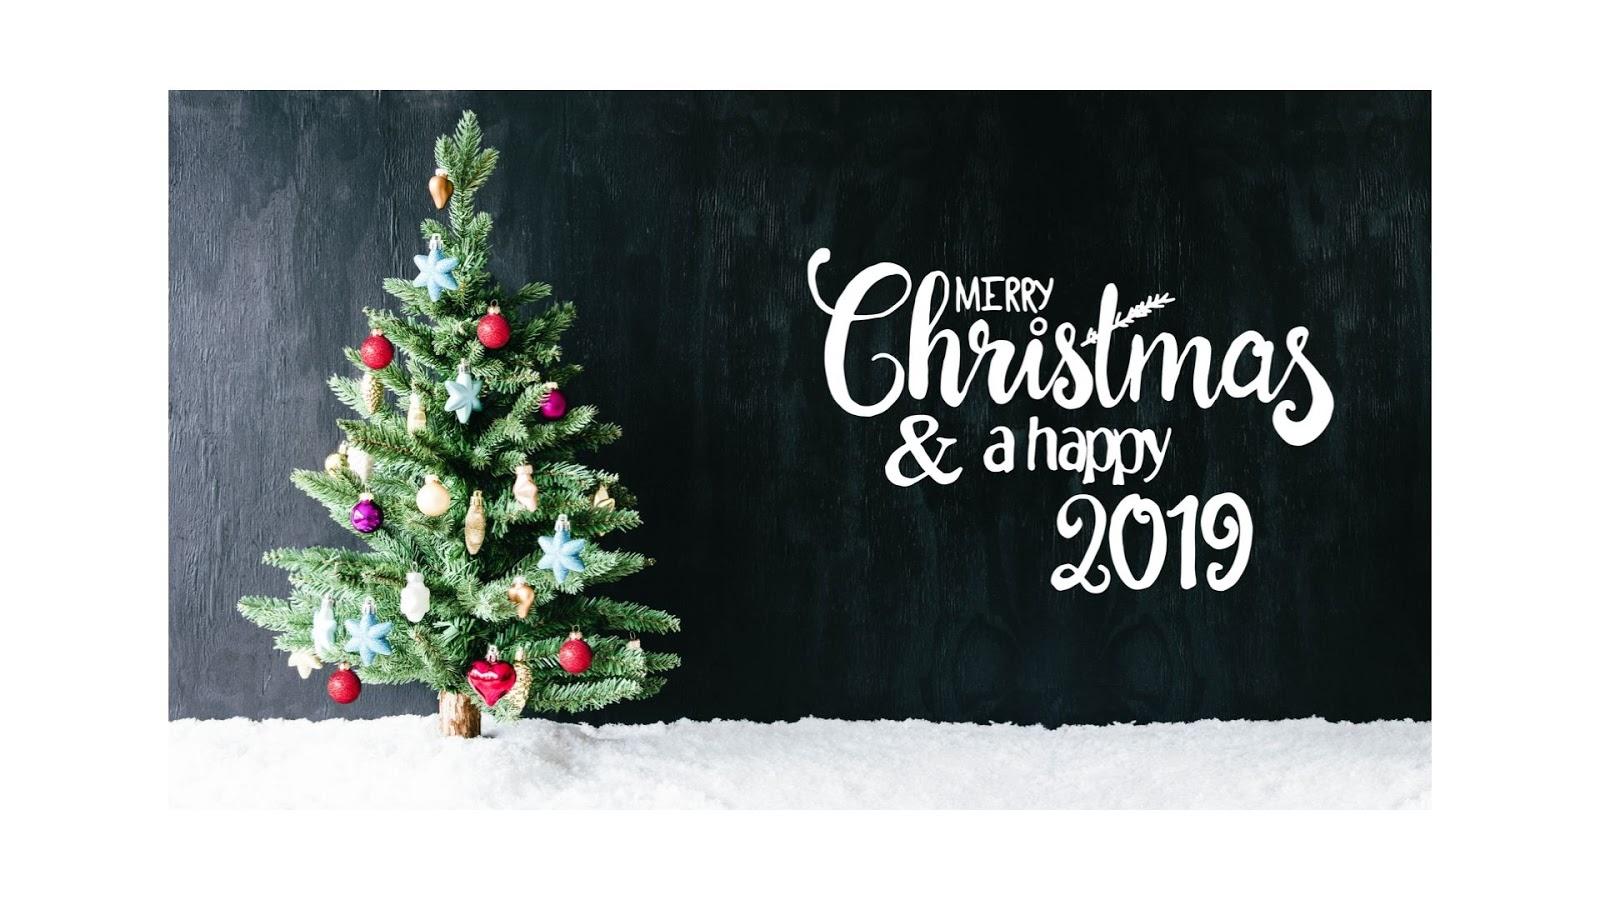 Happy Merry Christmas Image HD 2019. Merry Christmas